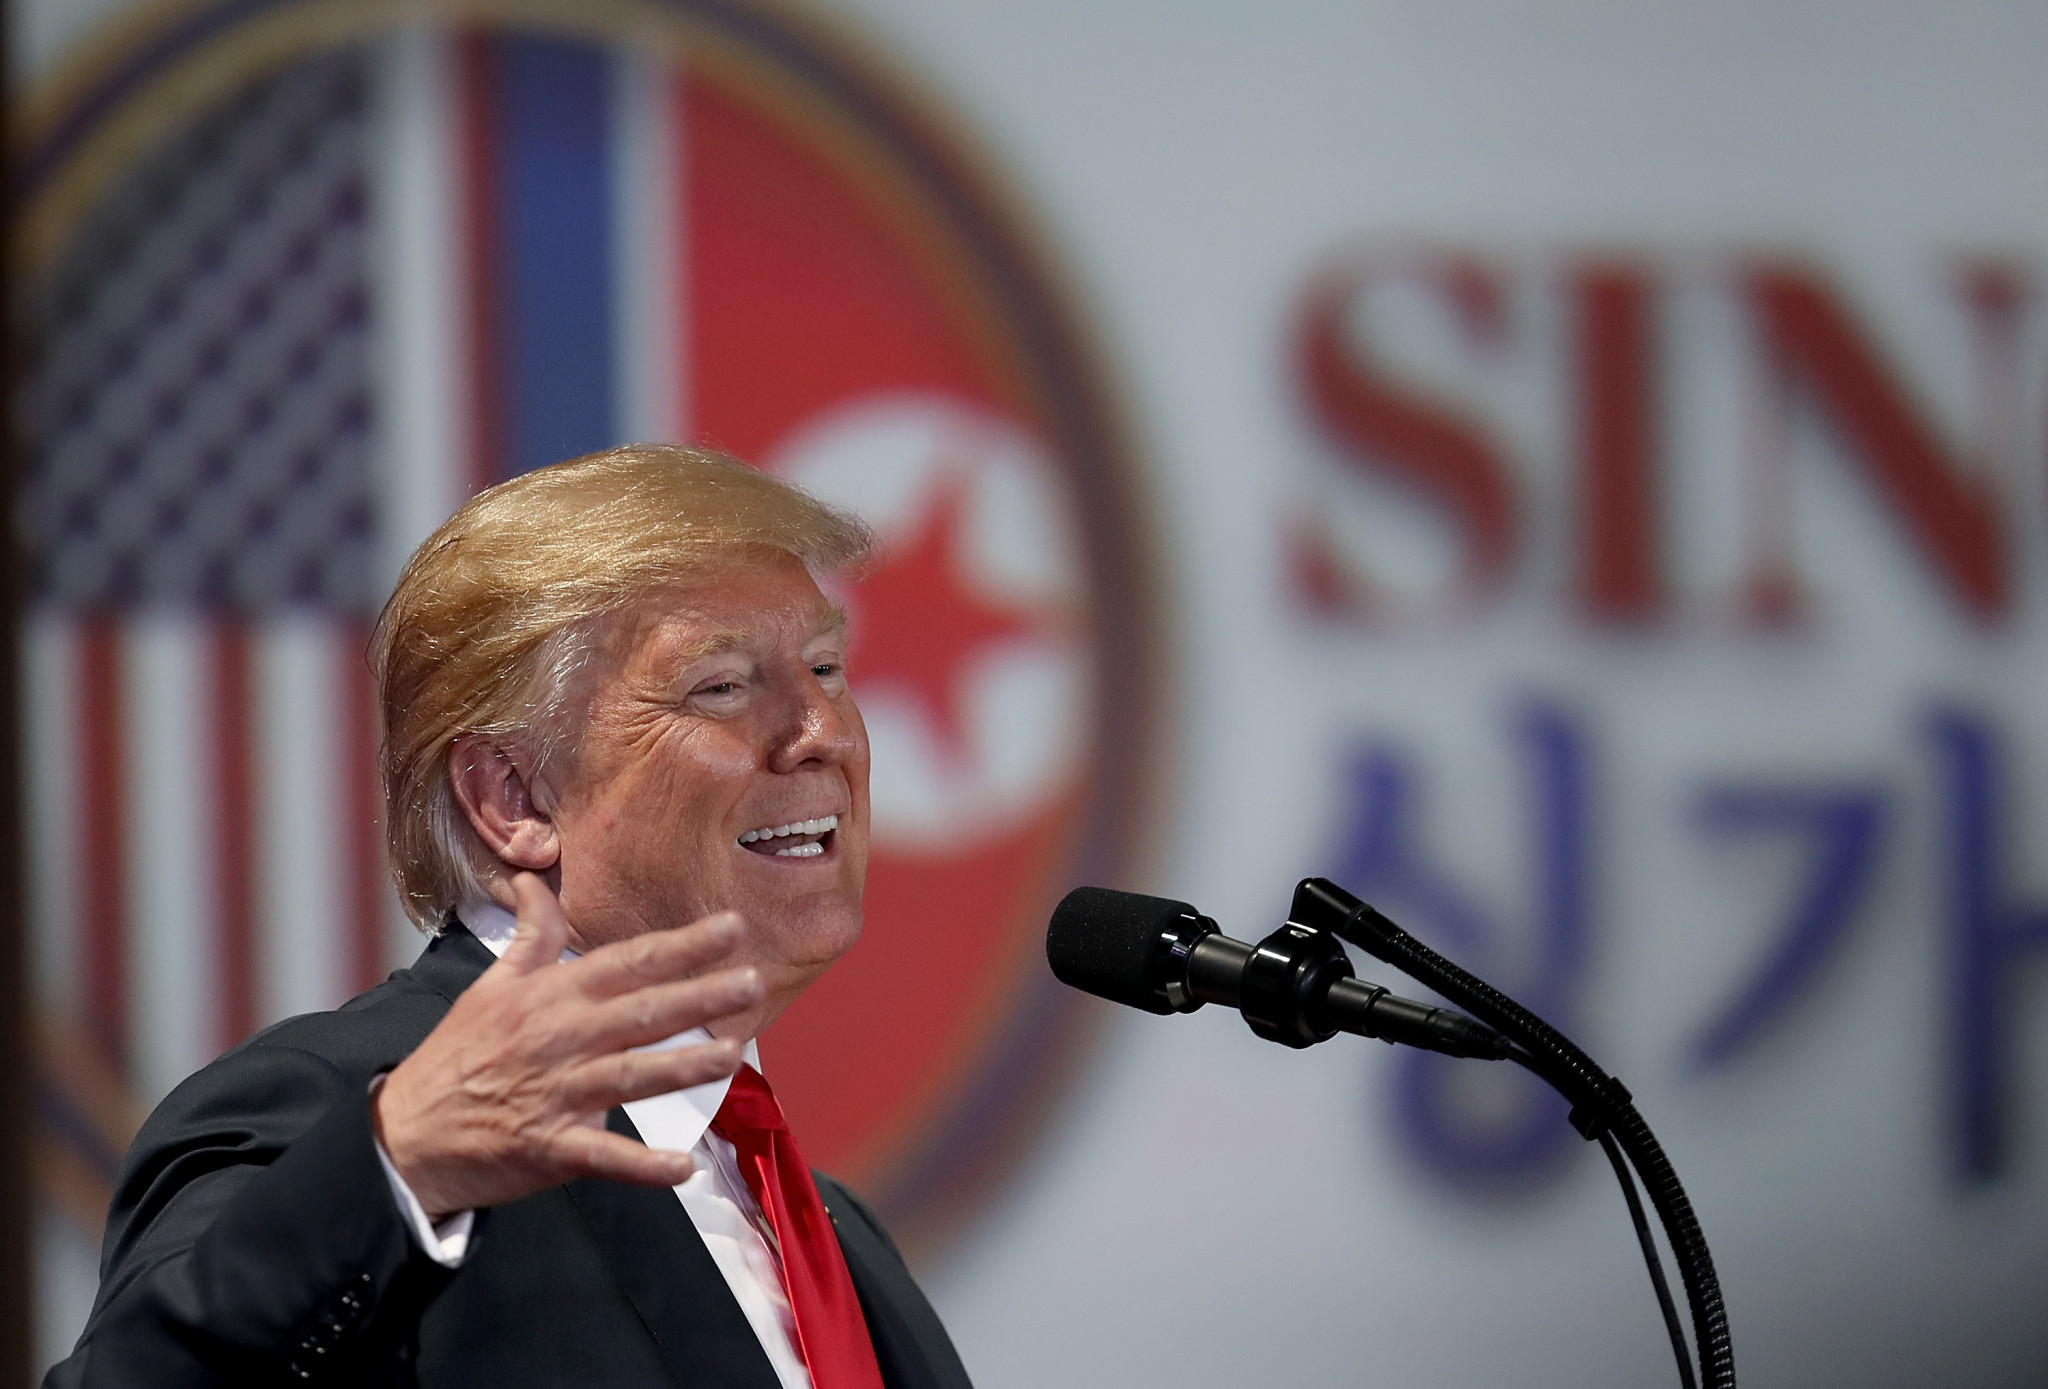 Trump says North Korea saved Pyeongchang 2018 from being "massive failure"